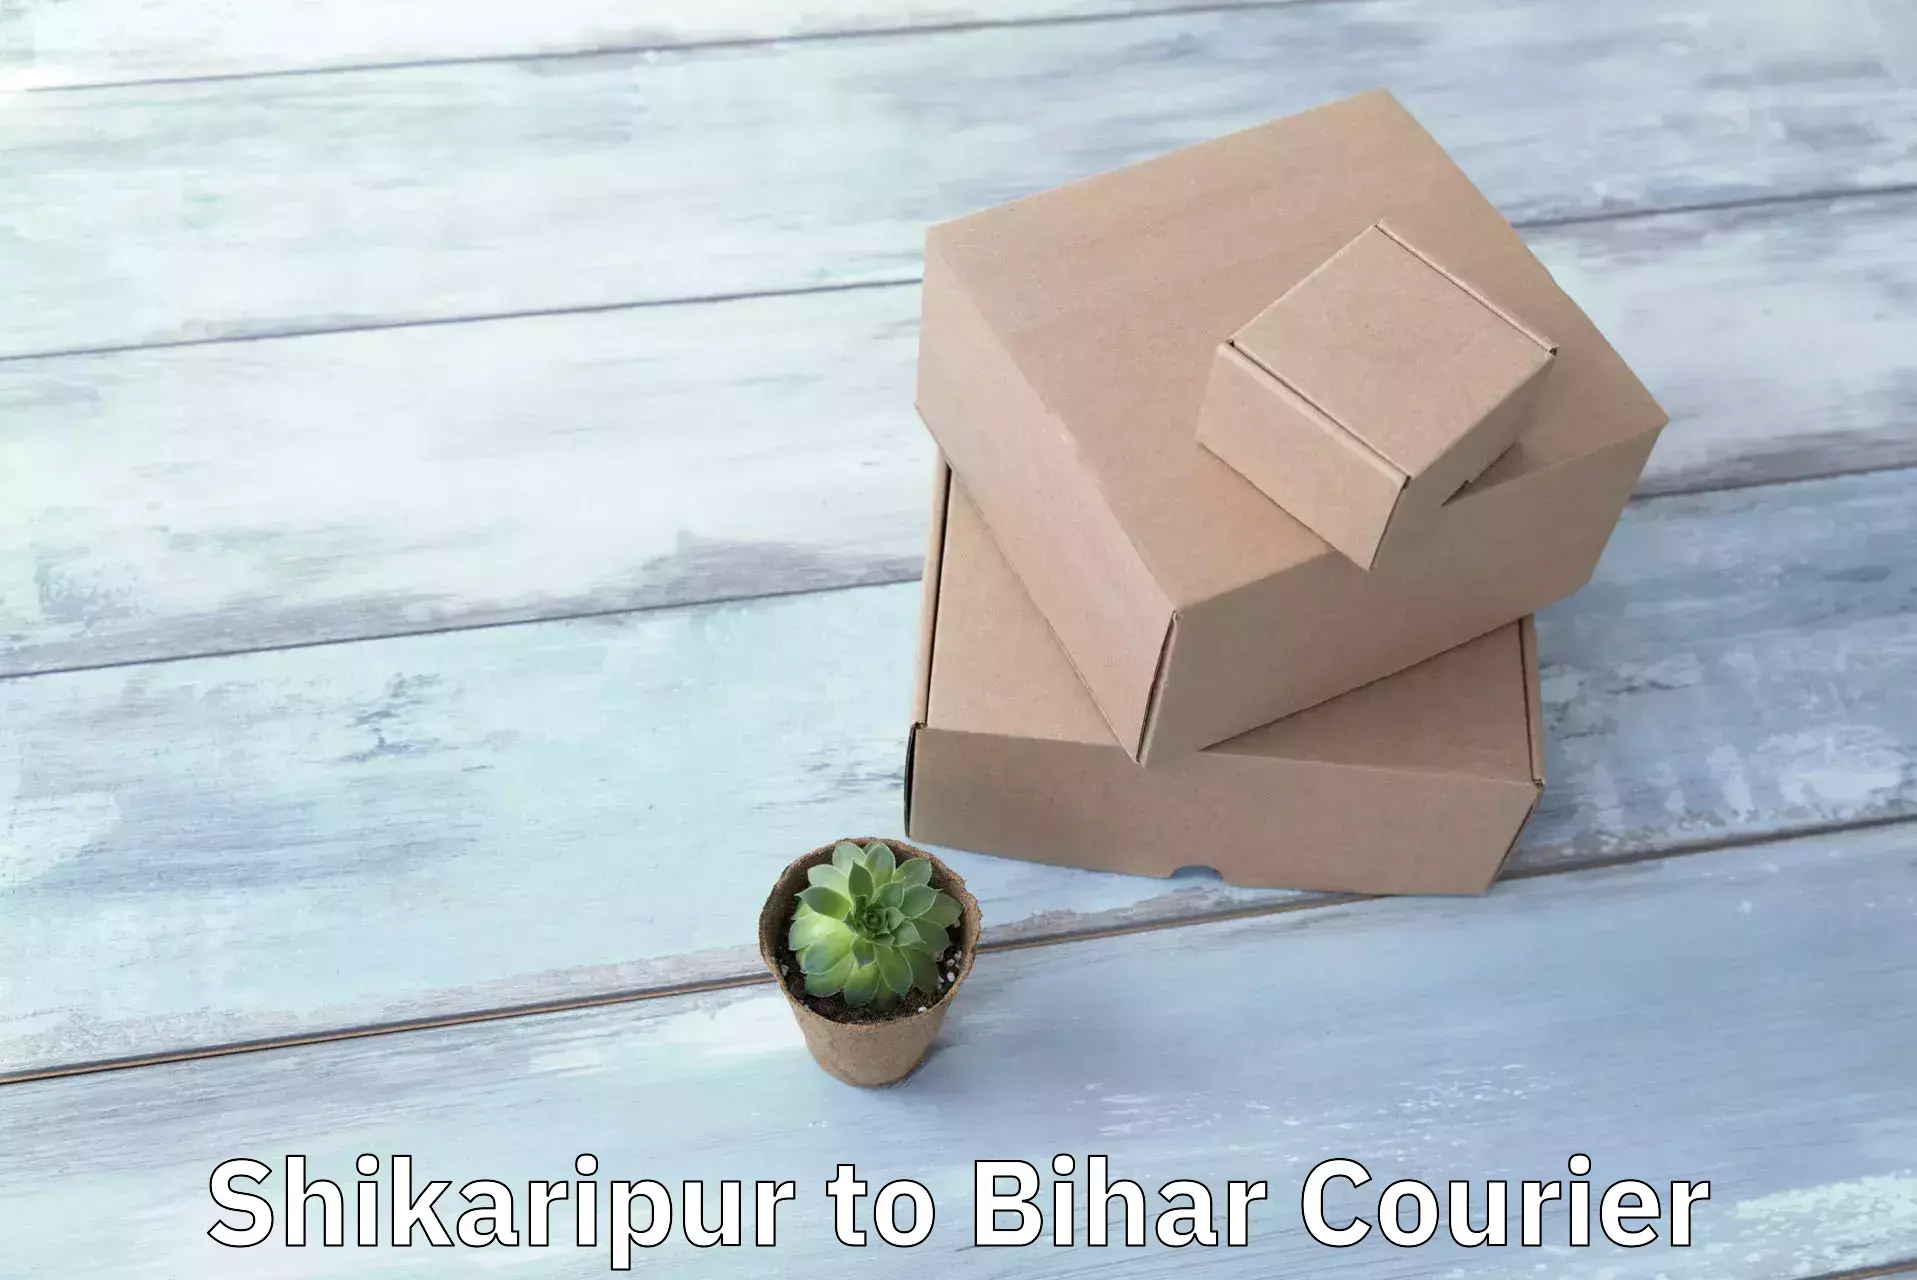 Courier service efficiency Shikaripur to Aurangabad Bihar